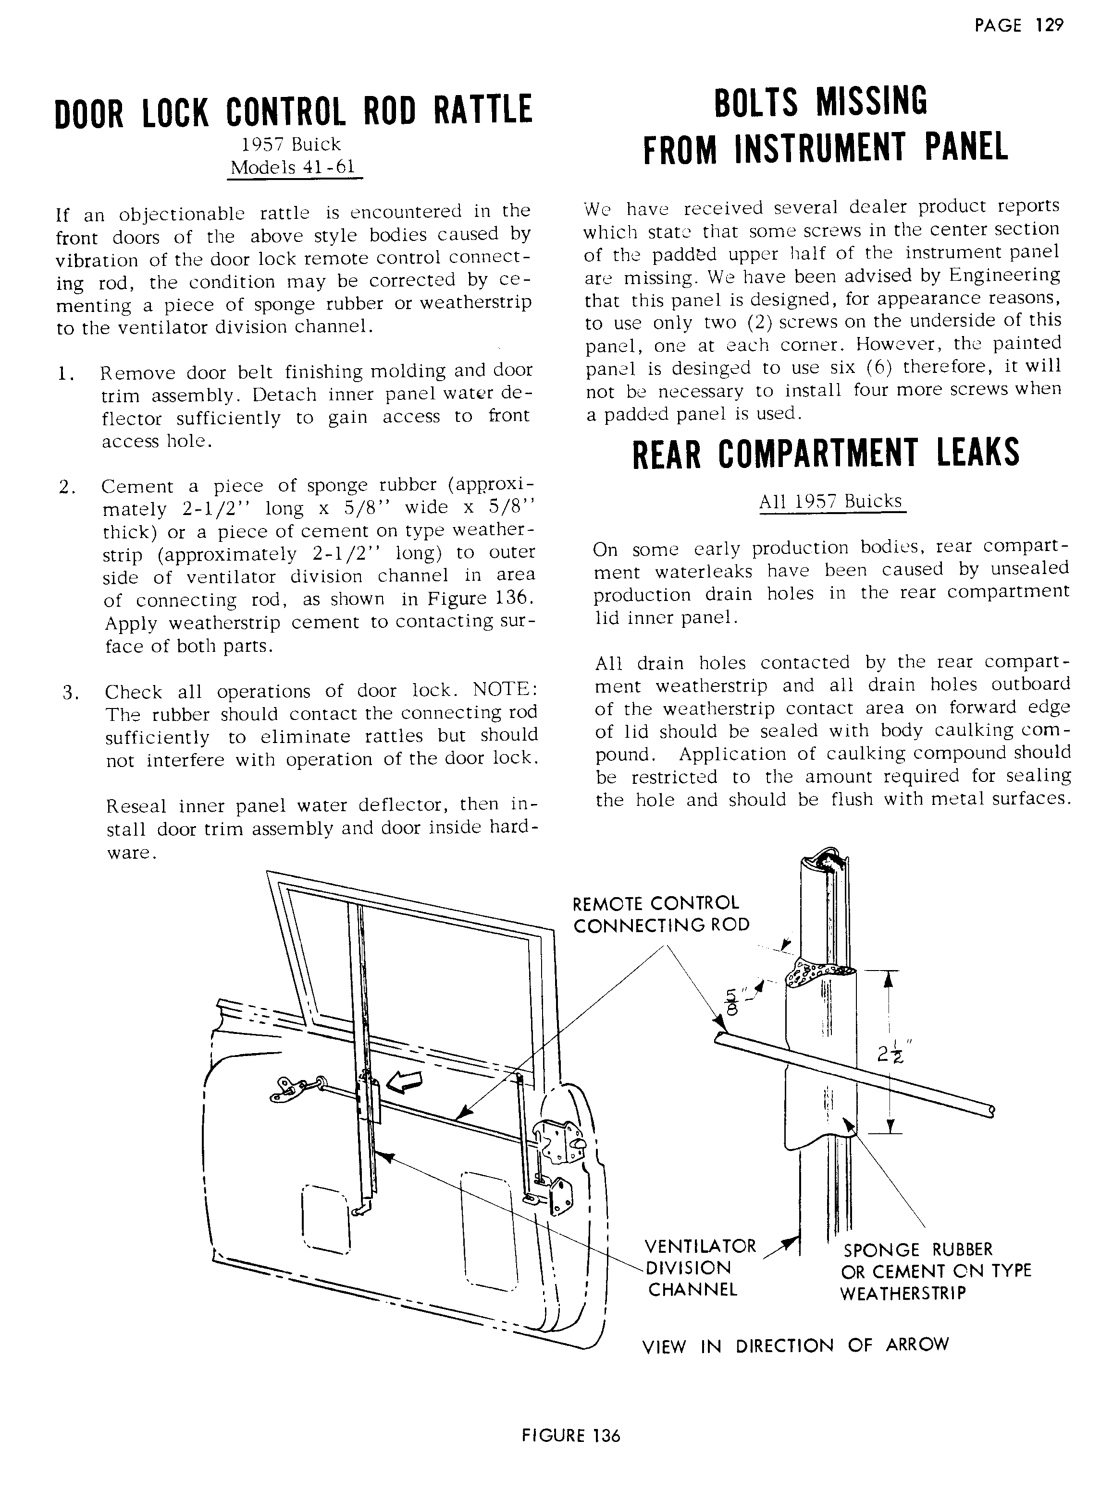 n_1957 Buick Product Service  Bulletins-130-130.jpg